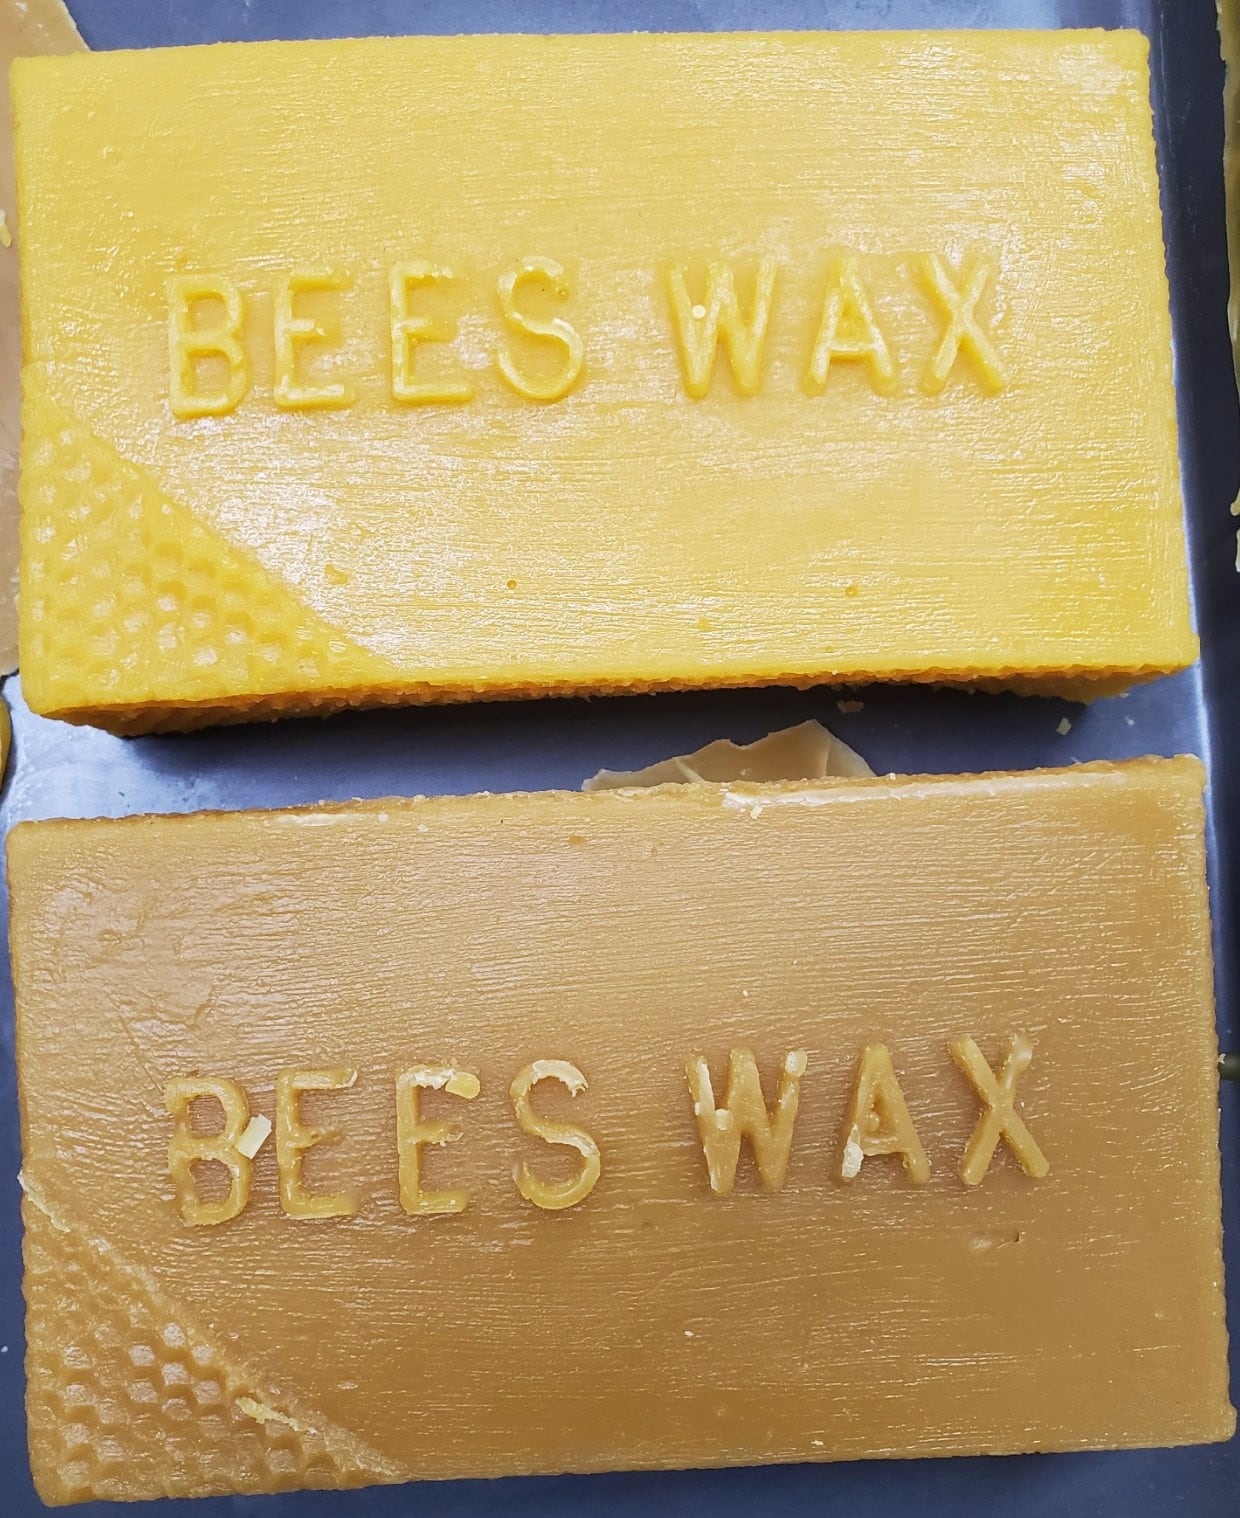 Beeswax - Bulk for $11.50/lb